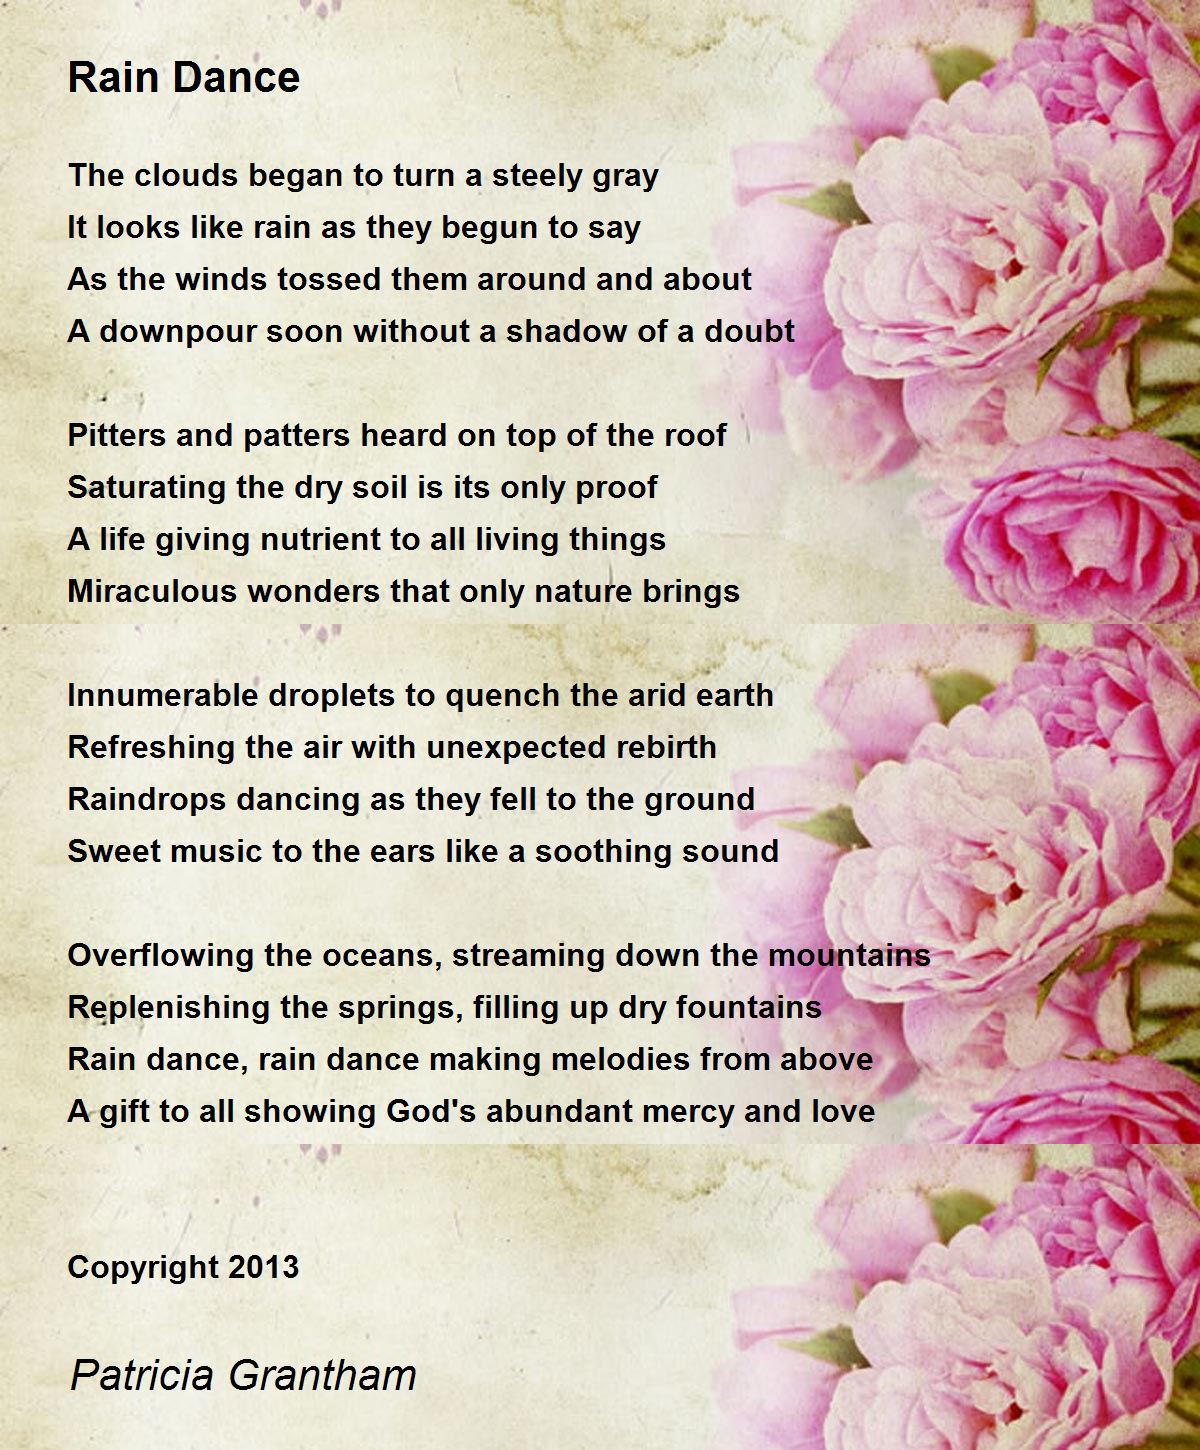 Rain Dance Poem by Patricia Grantham - Poem Hunter